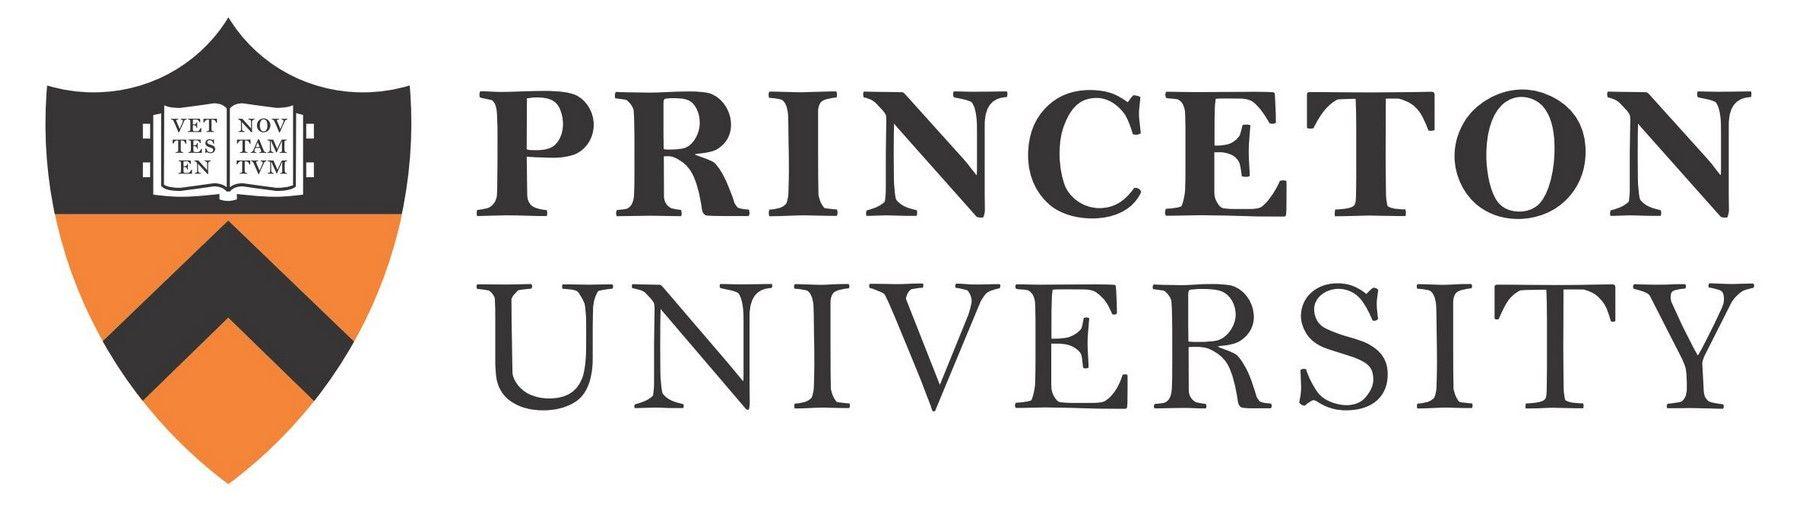 Most Popular University Logo - princeton-university-logo - 3 Day Startup